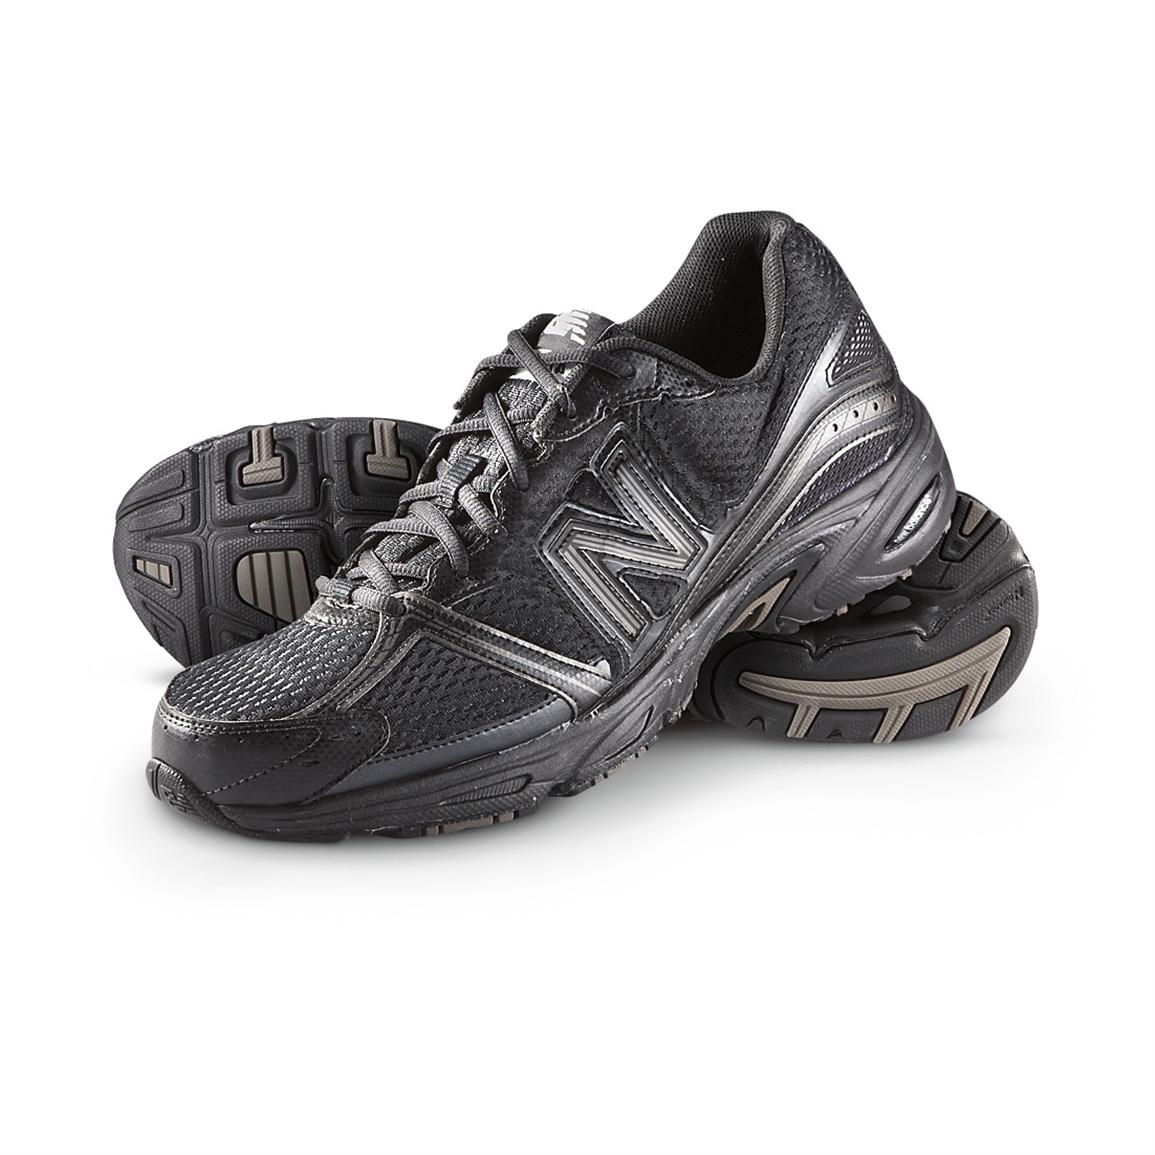 new balance 470 men's running shoe review